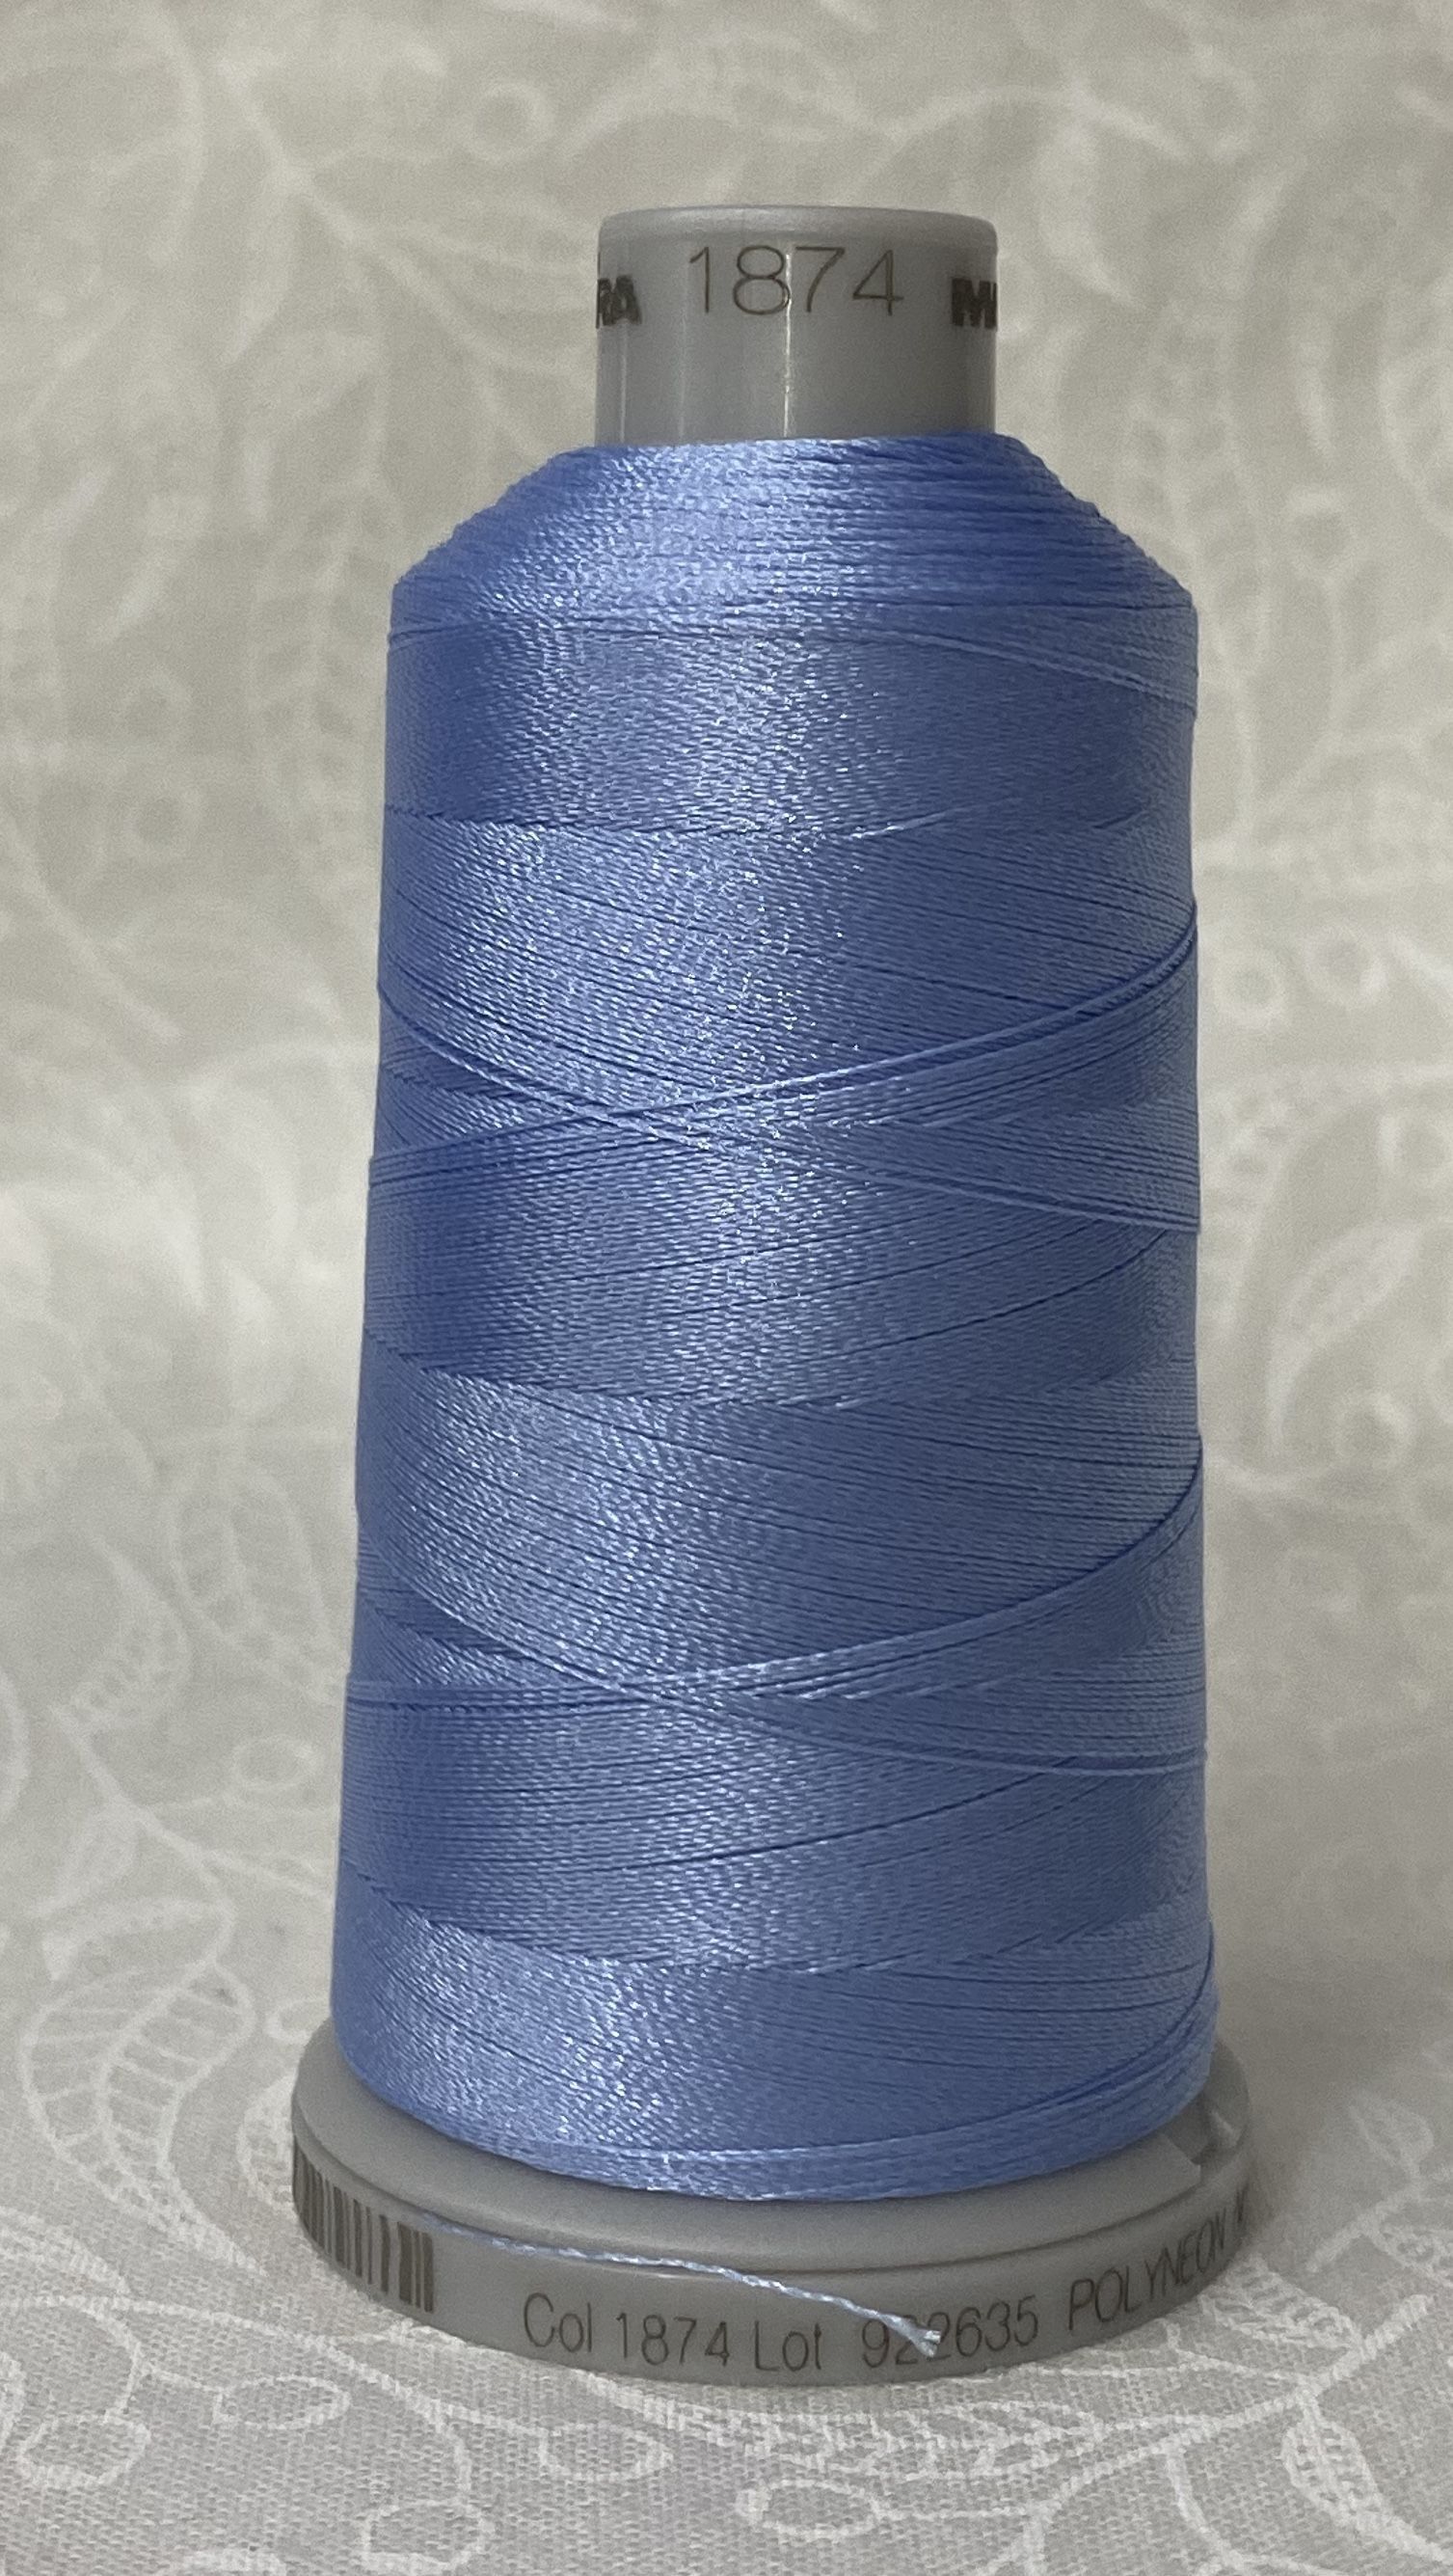 Baby Blue 1874 #40 Weight Madeira Polyneon Thread